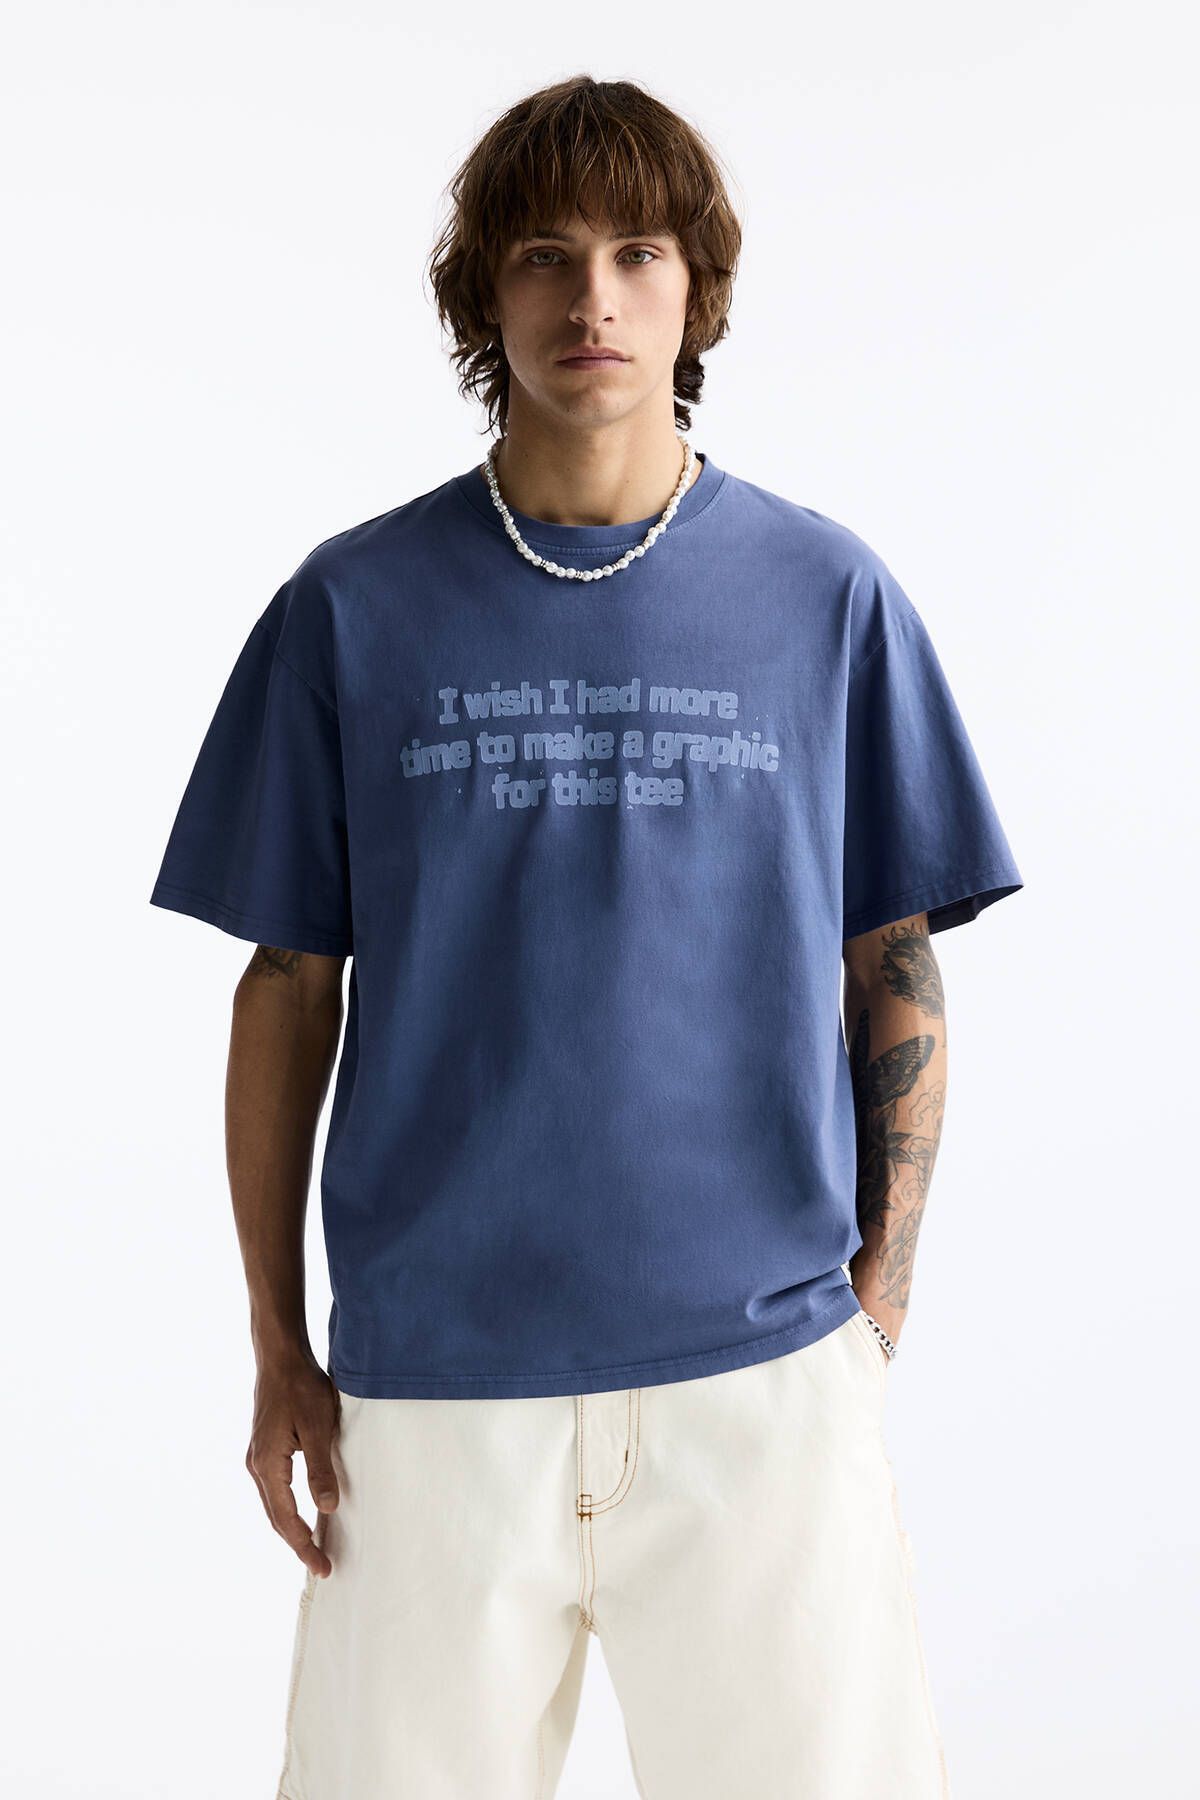 Pull & Bear Soluk efektli STWD sloganlı t-shirt